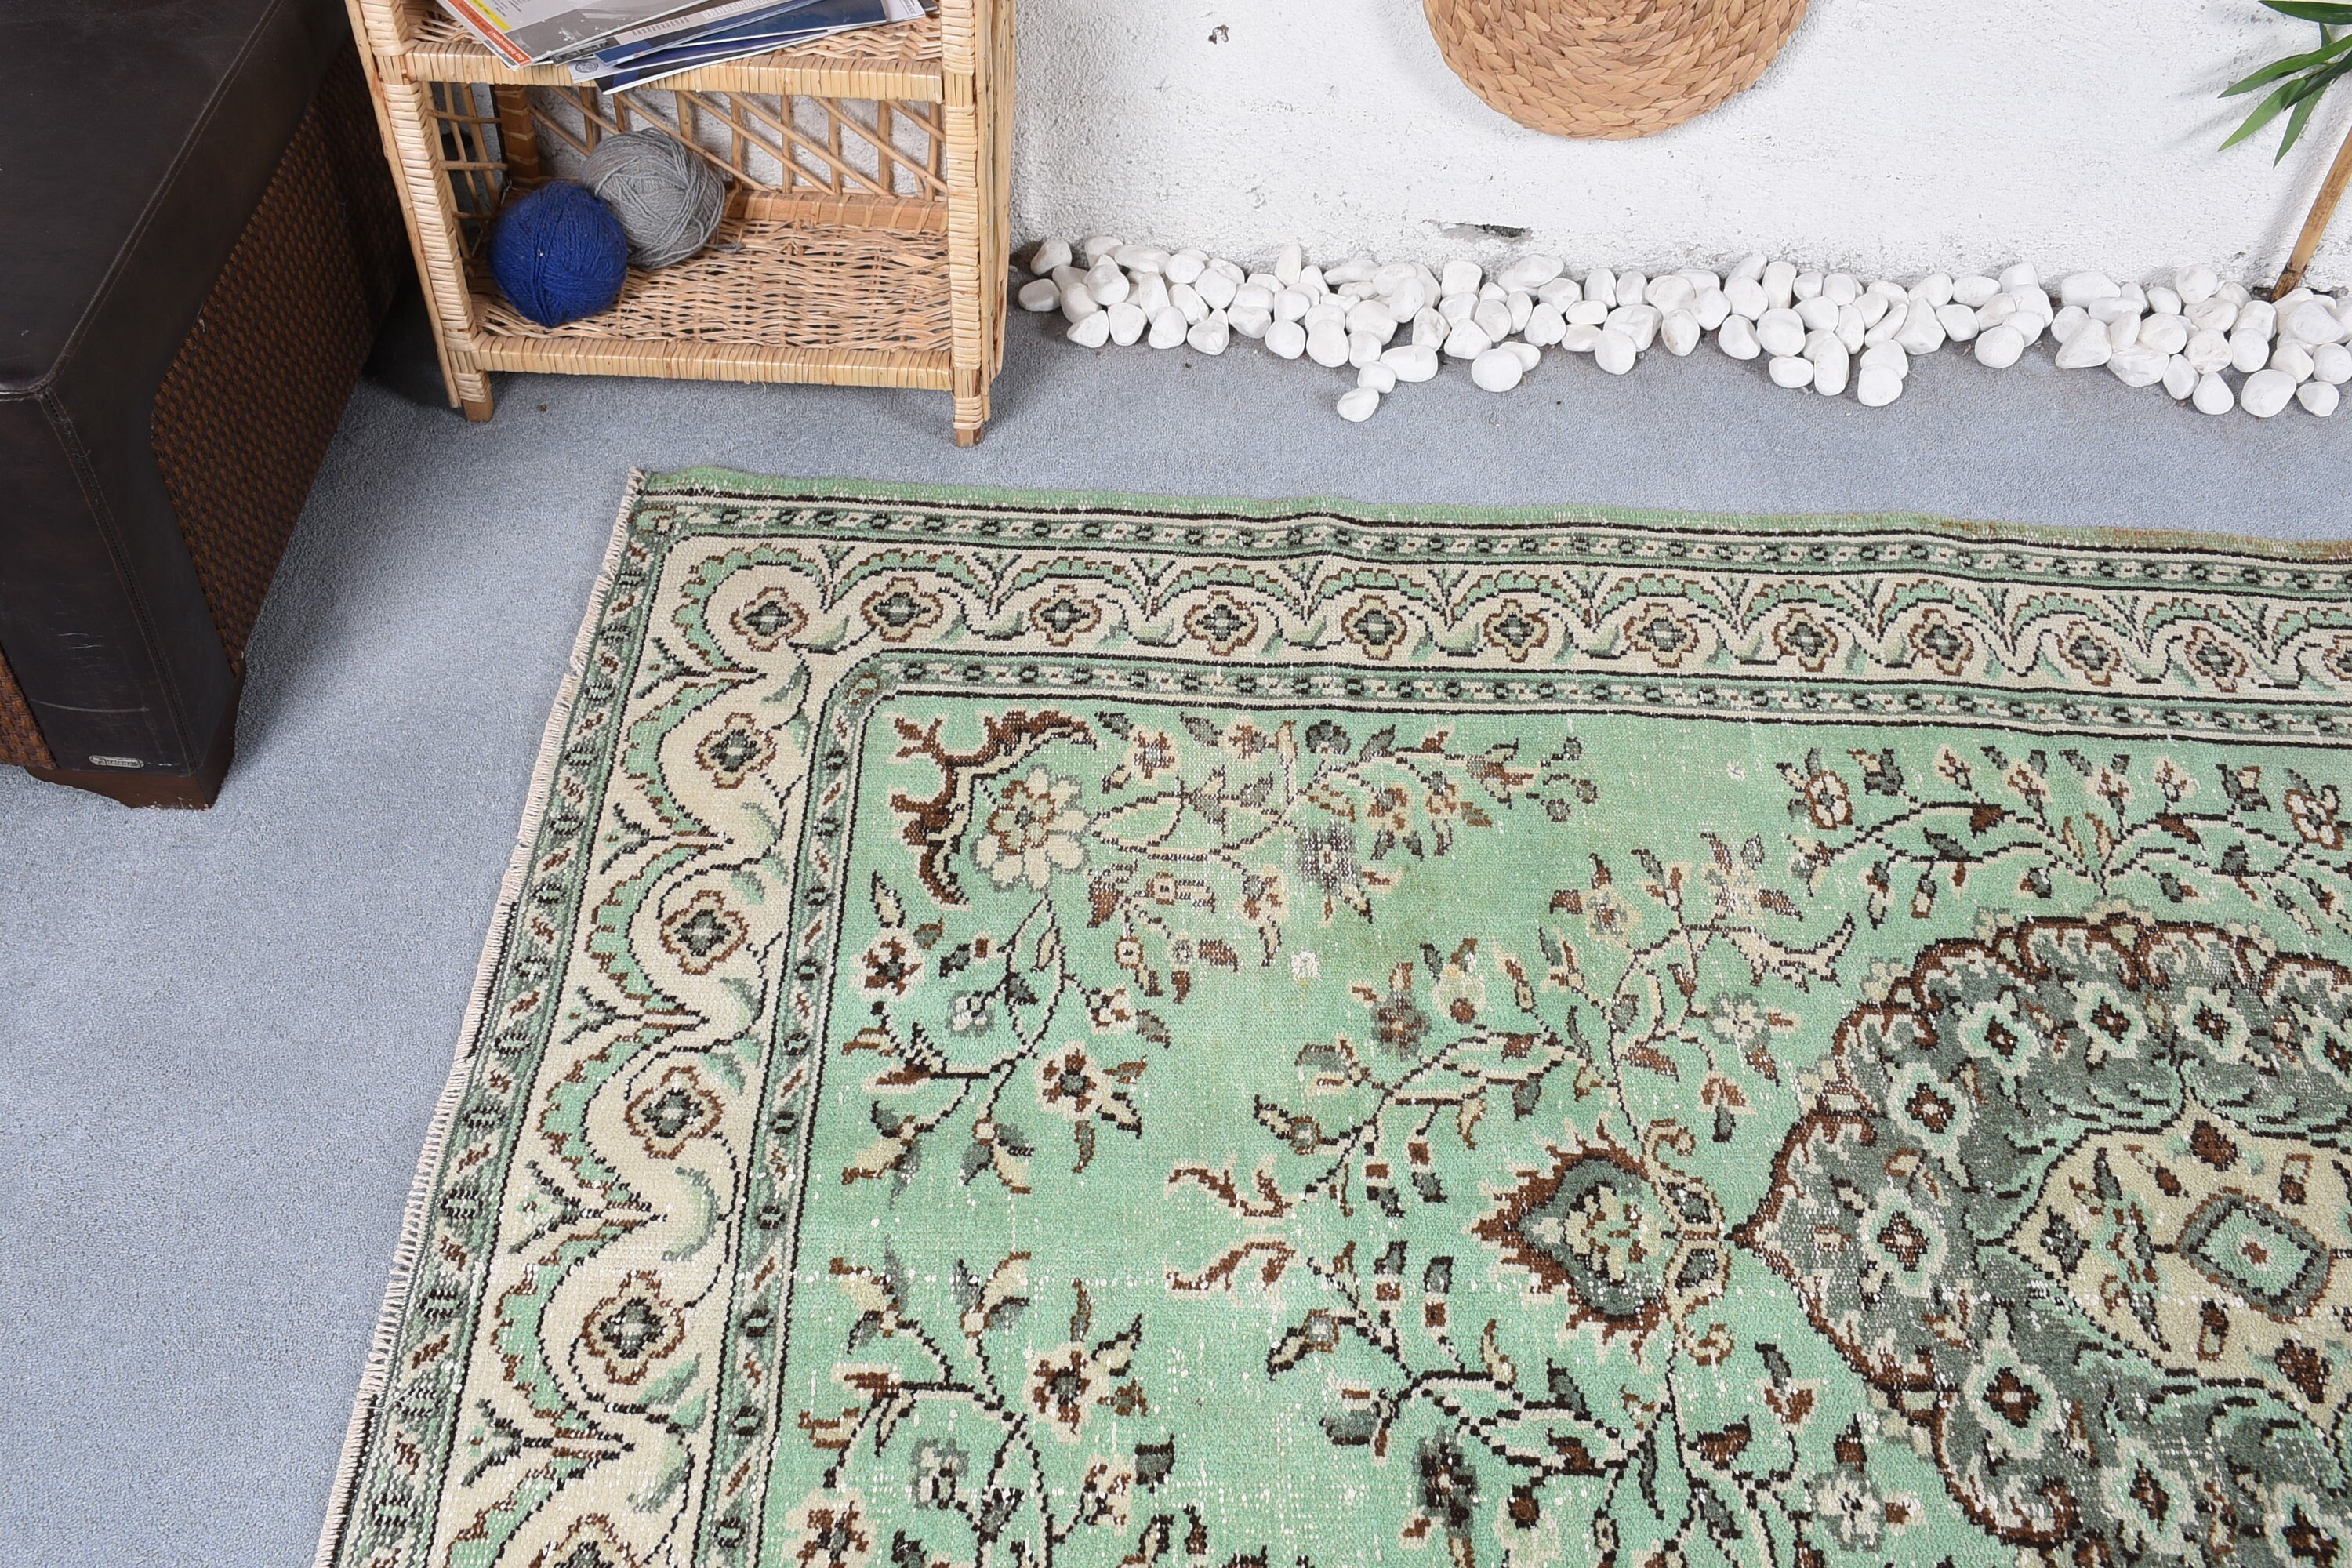 Abstract Rug, Dining Room Rug, Cool Rug, Turkish Rug, Vintage Rug, Anatolian Rugs, Green Antique Rugs, 5.2x8.2 ft Large Rug, Bedroom Rug